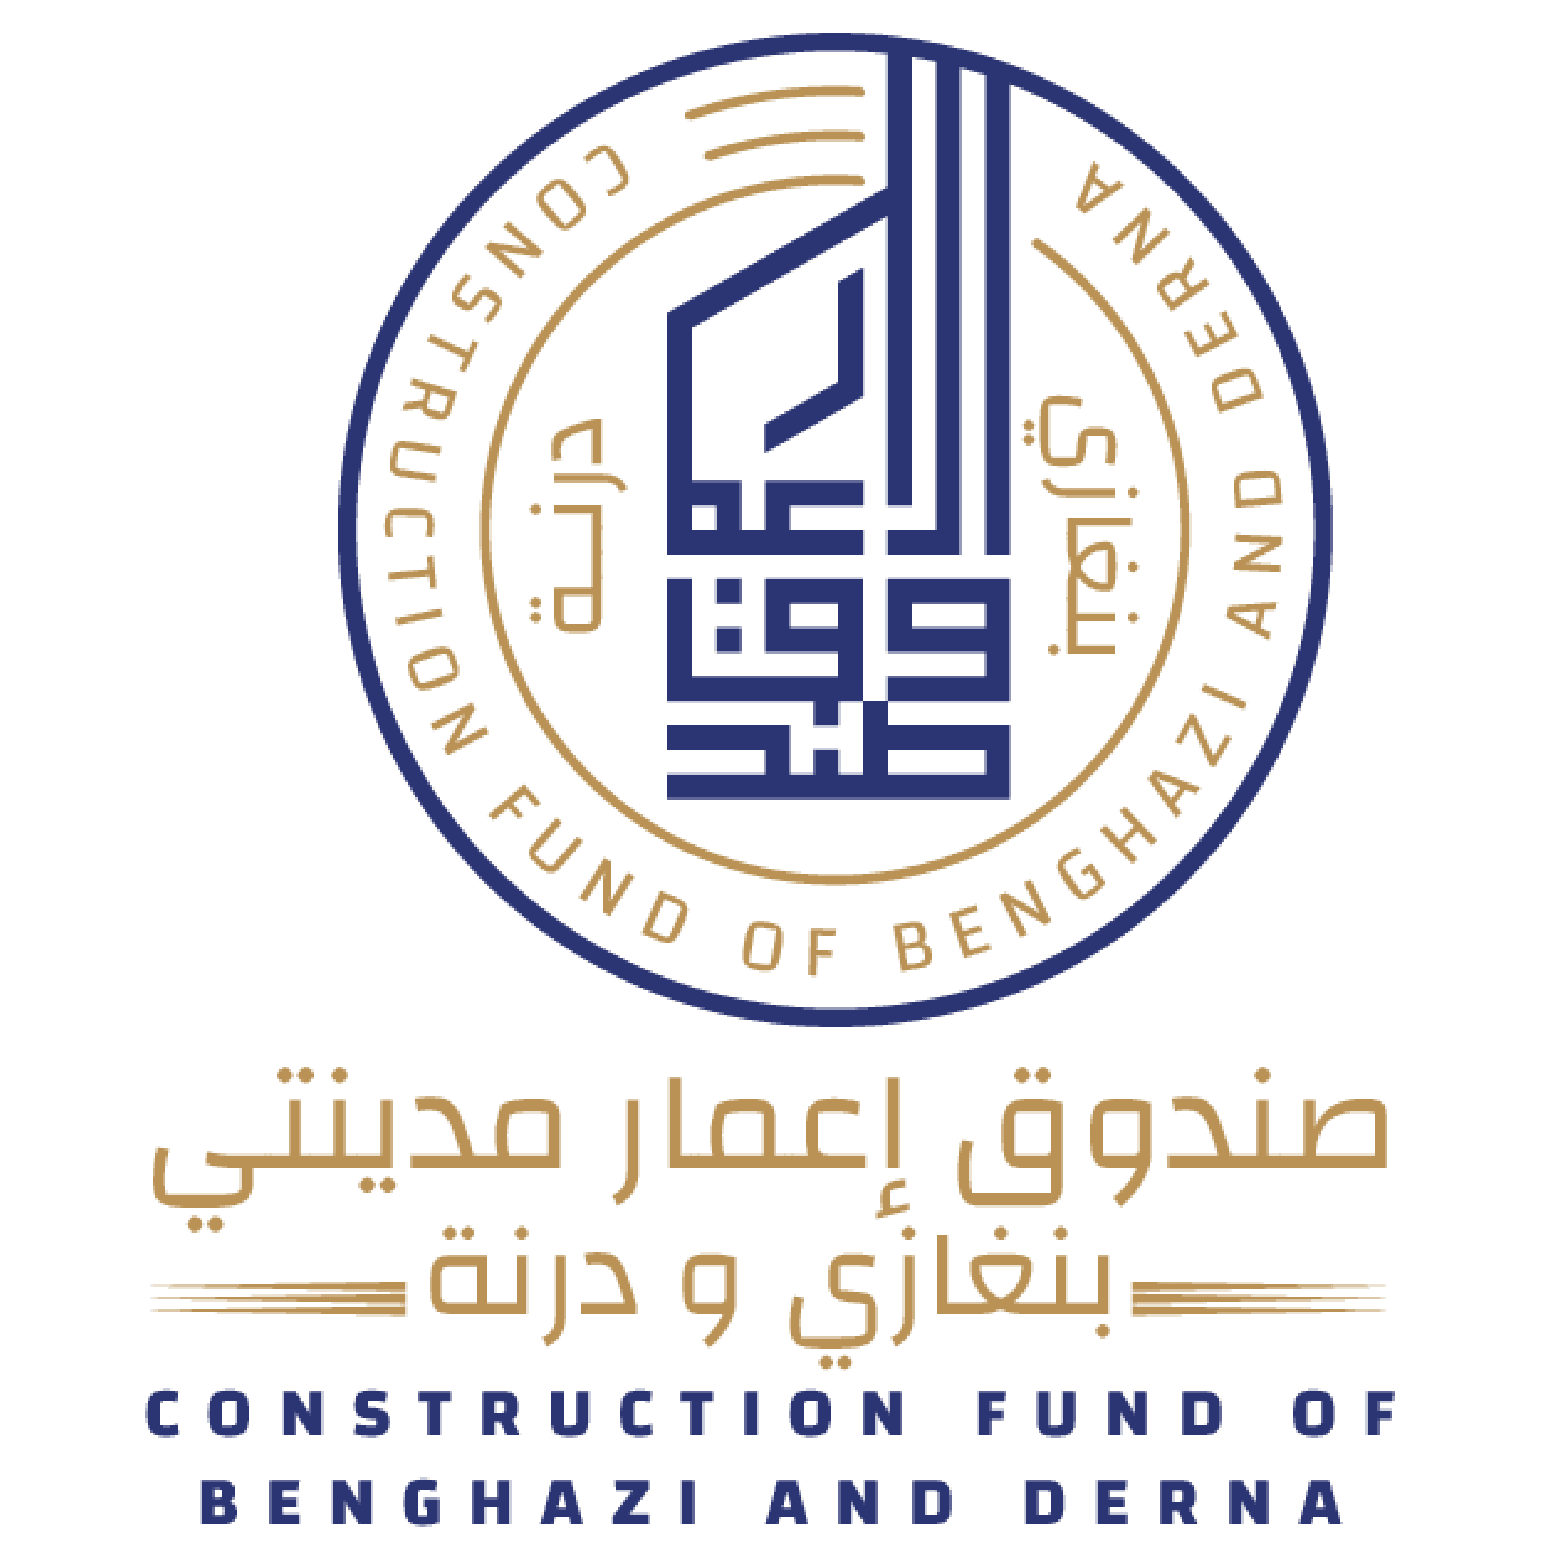 Benghazi and Derna Construction Fund